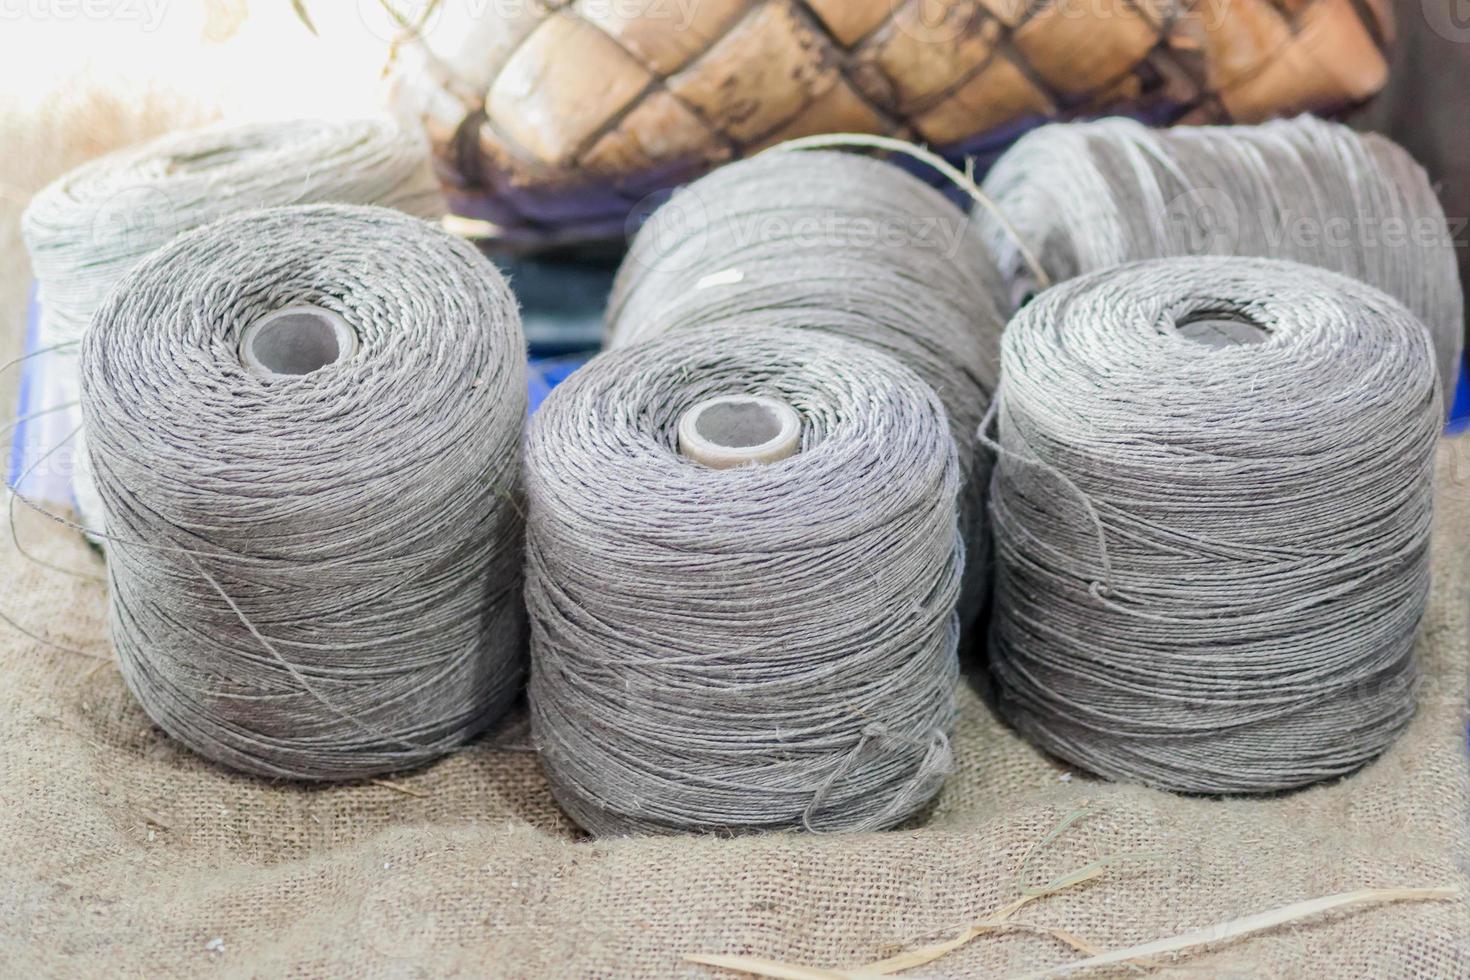 gray silver yarn threads spools bobbin close up. sewing workshop details photo